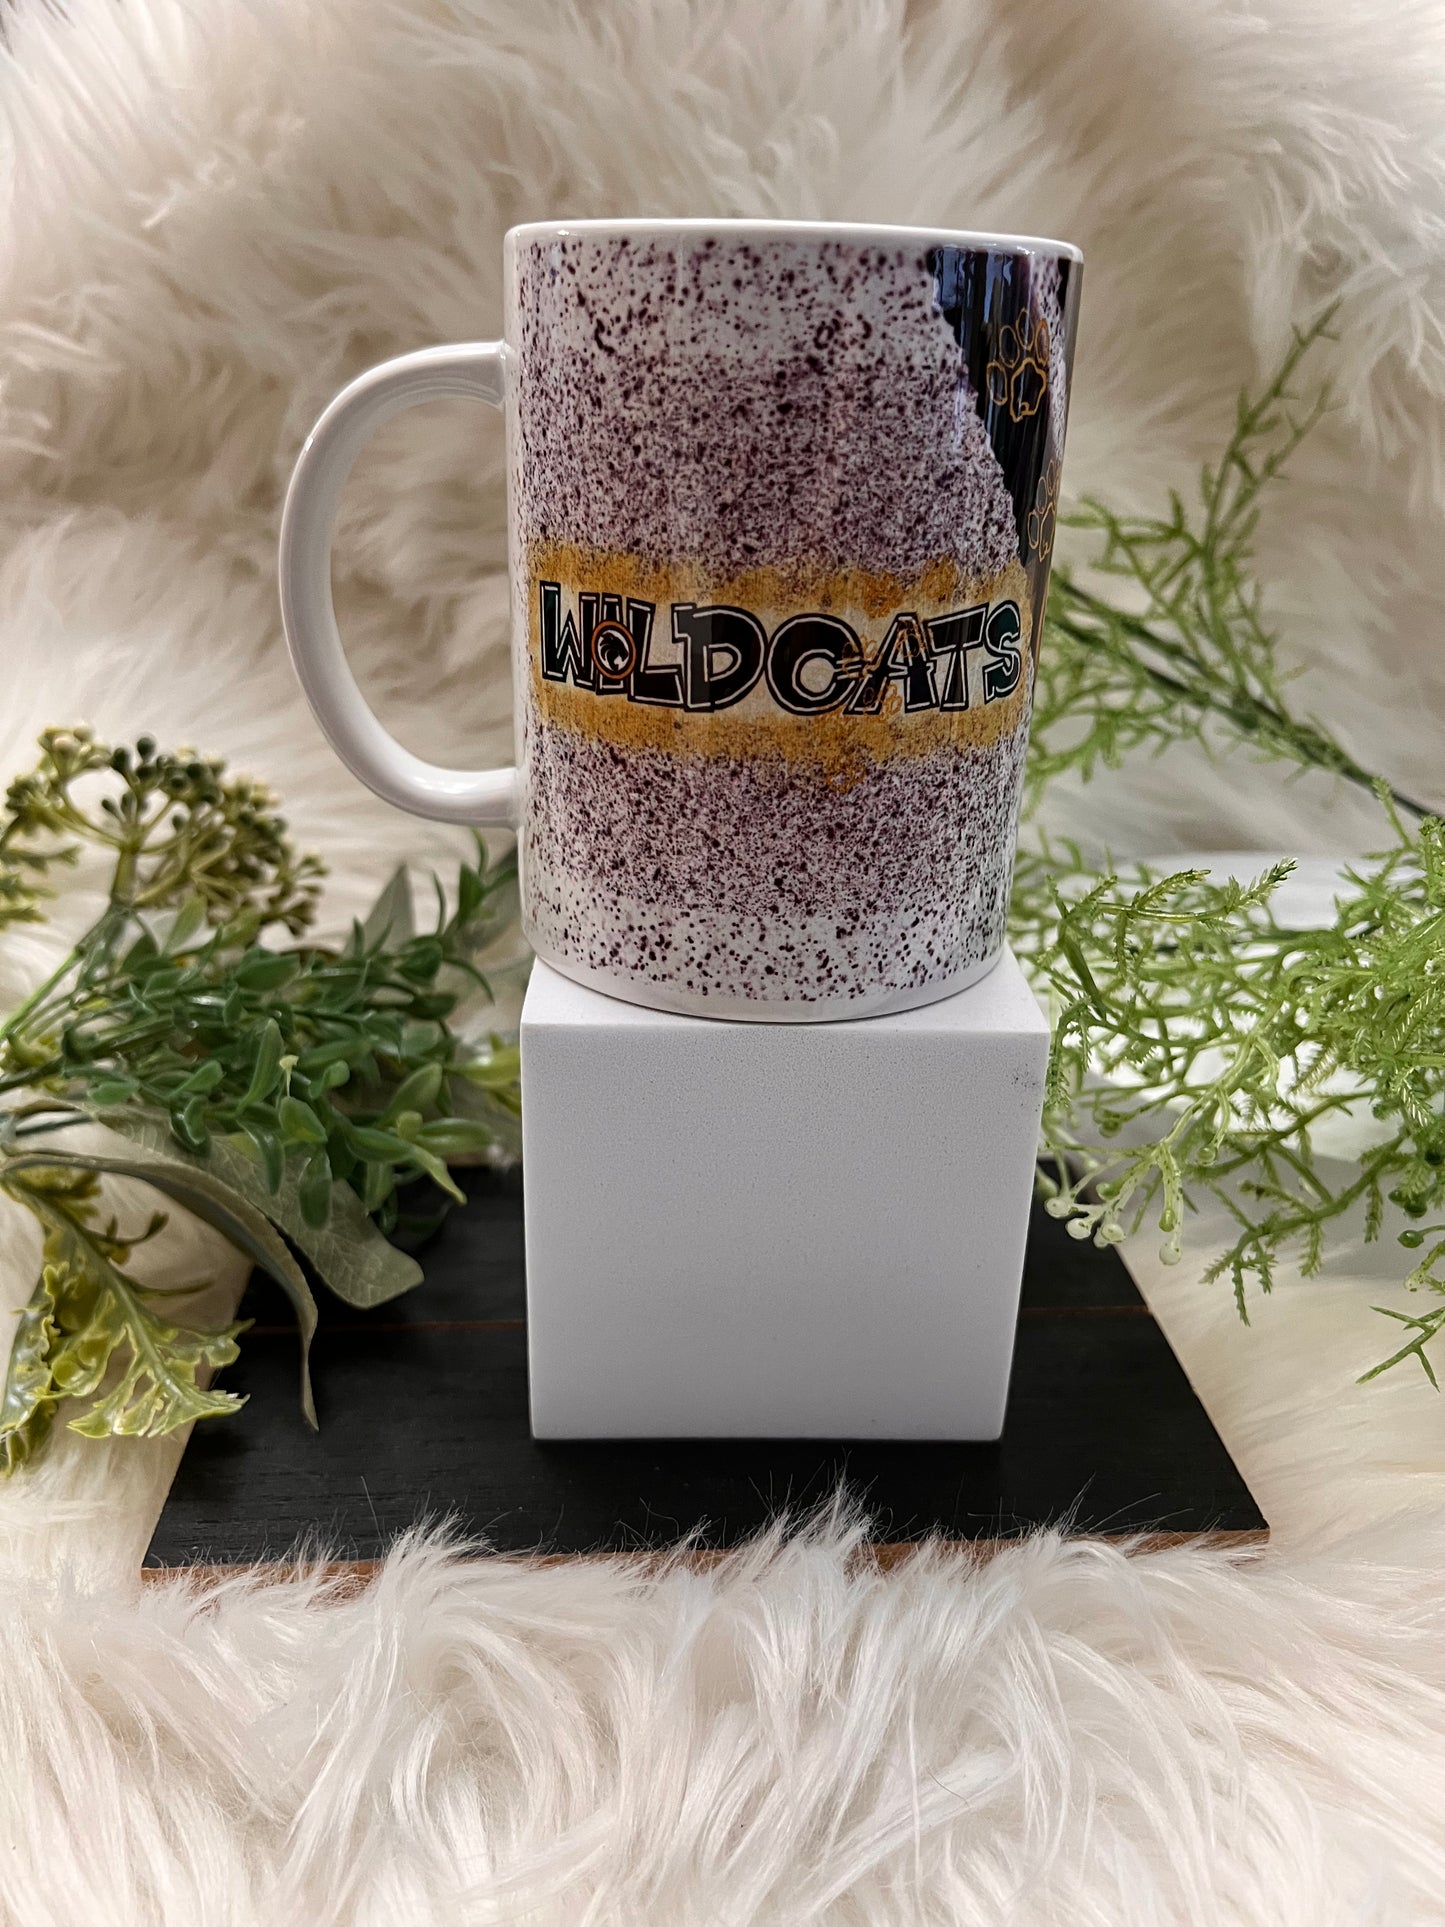 Wildcats Coffee Mug